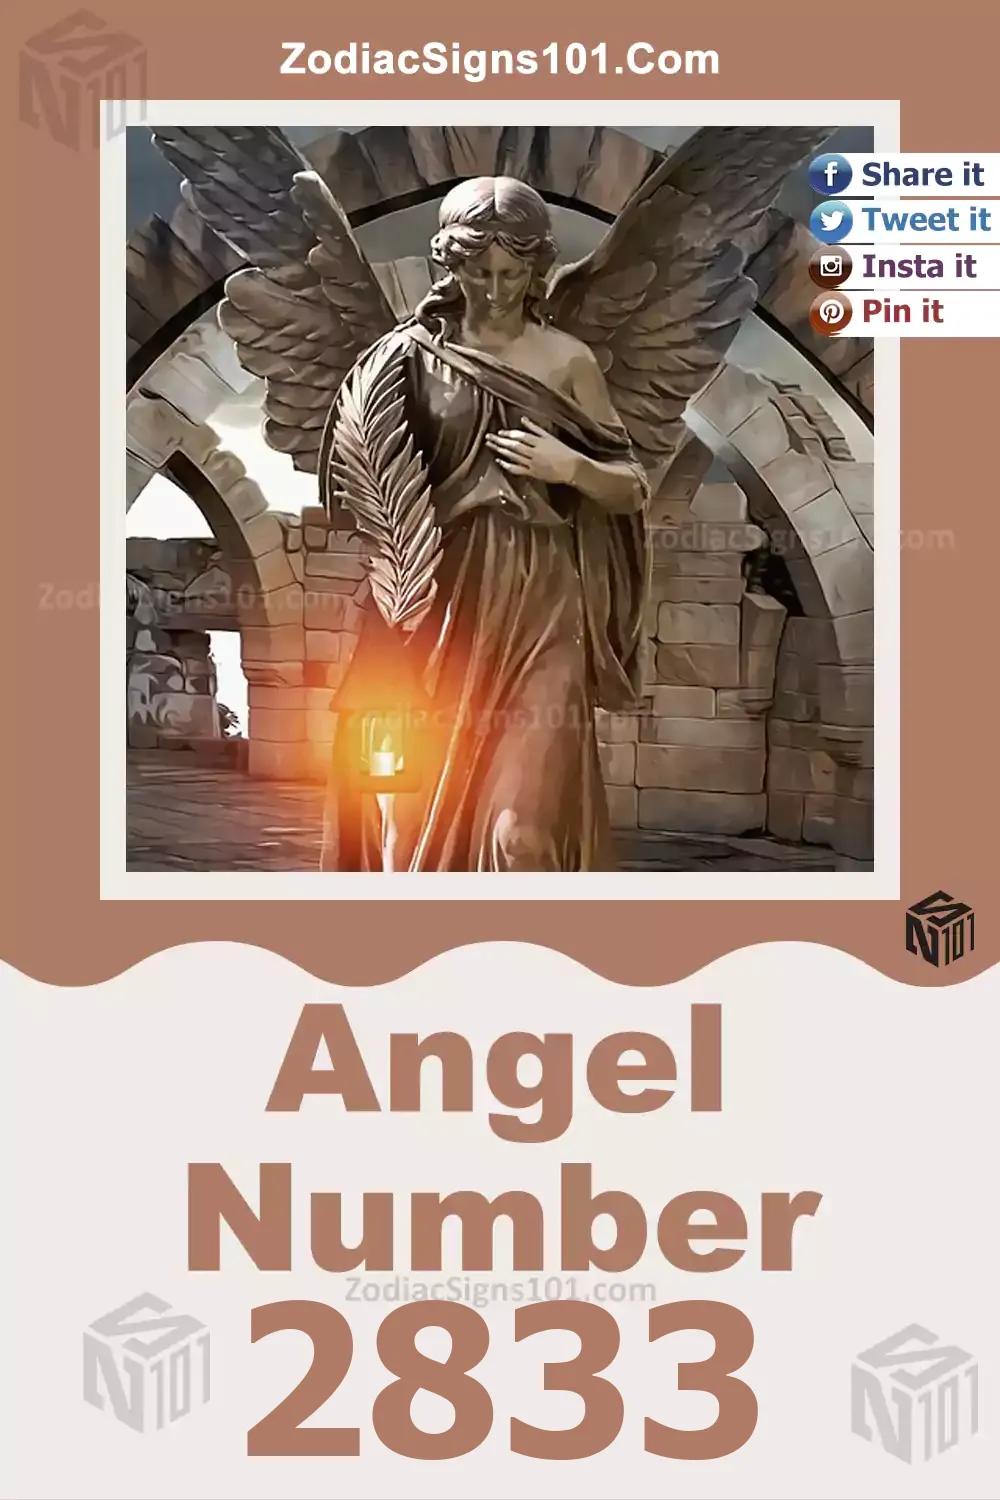 2833-Angel-Number-Meaning.jpg